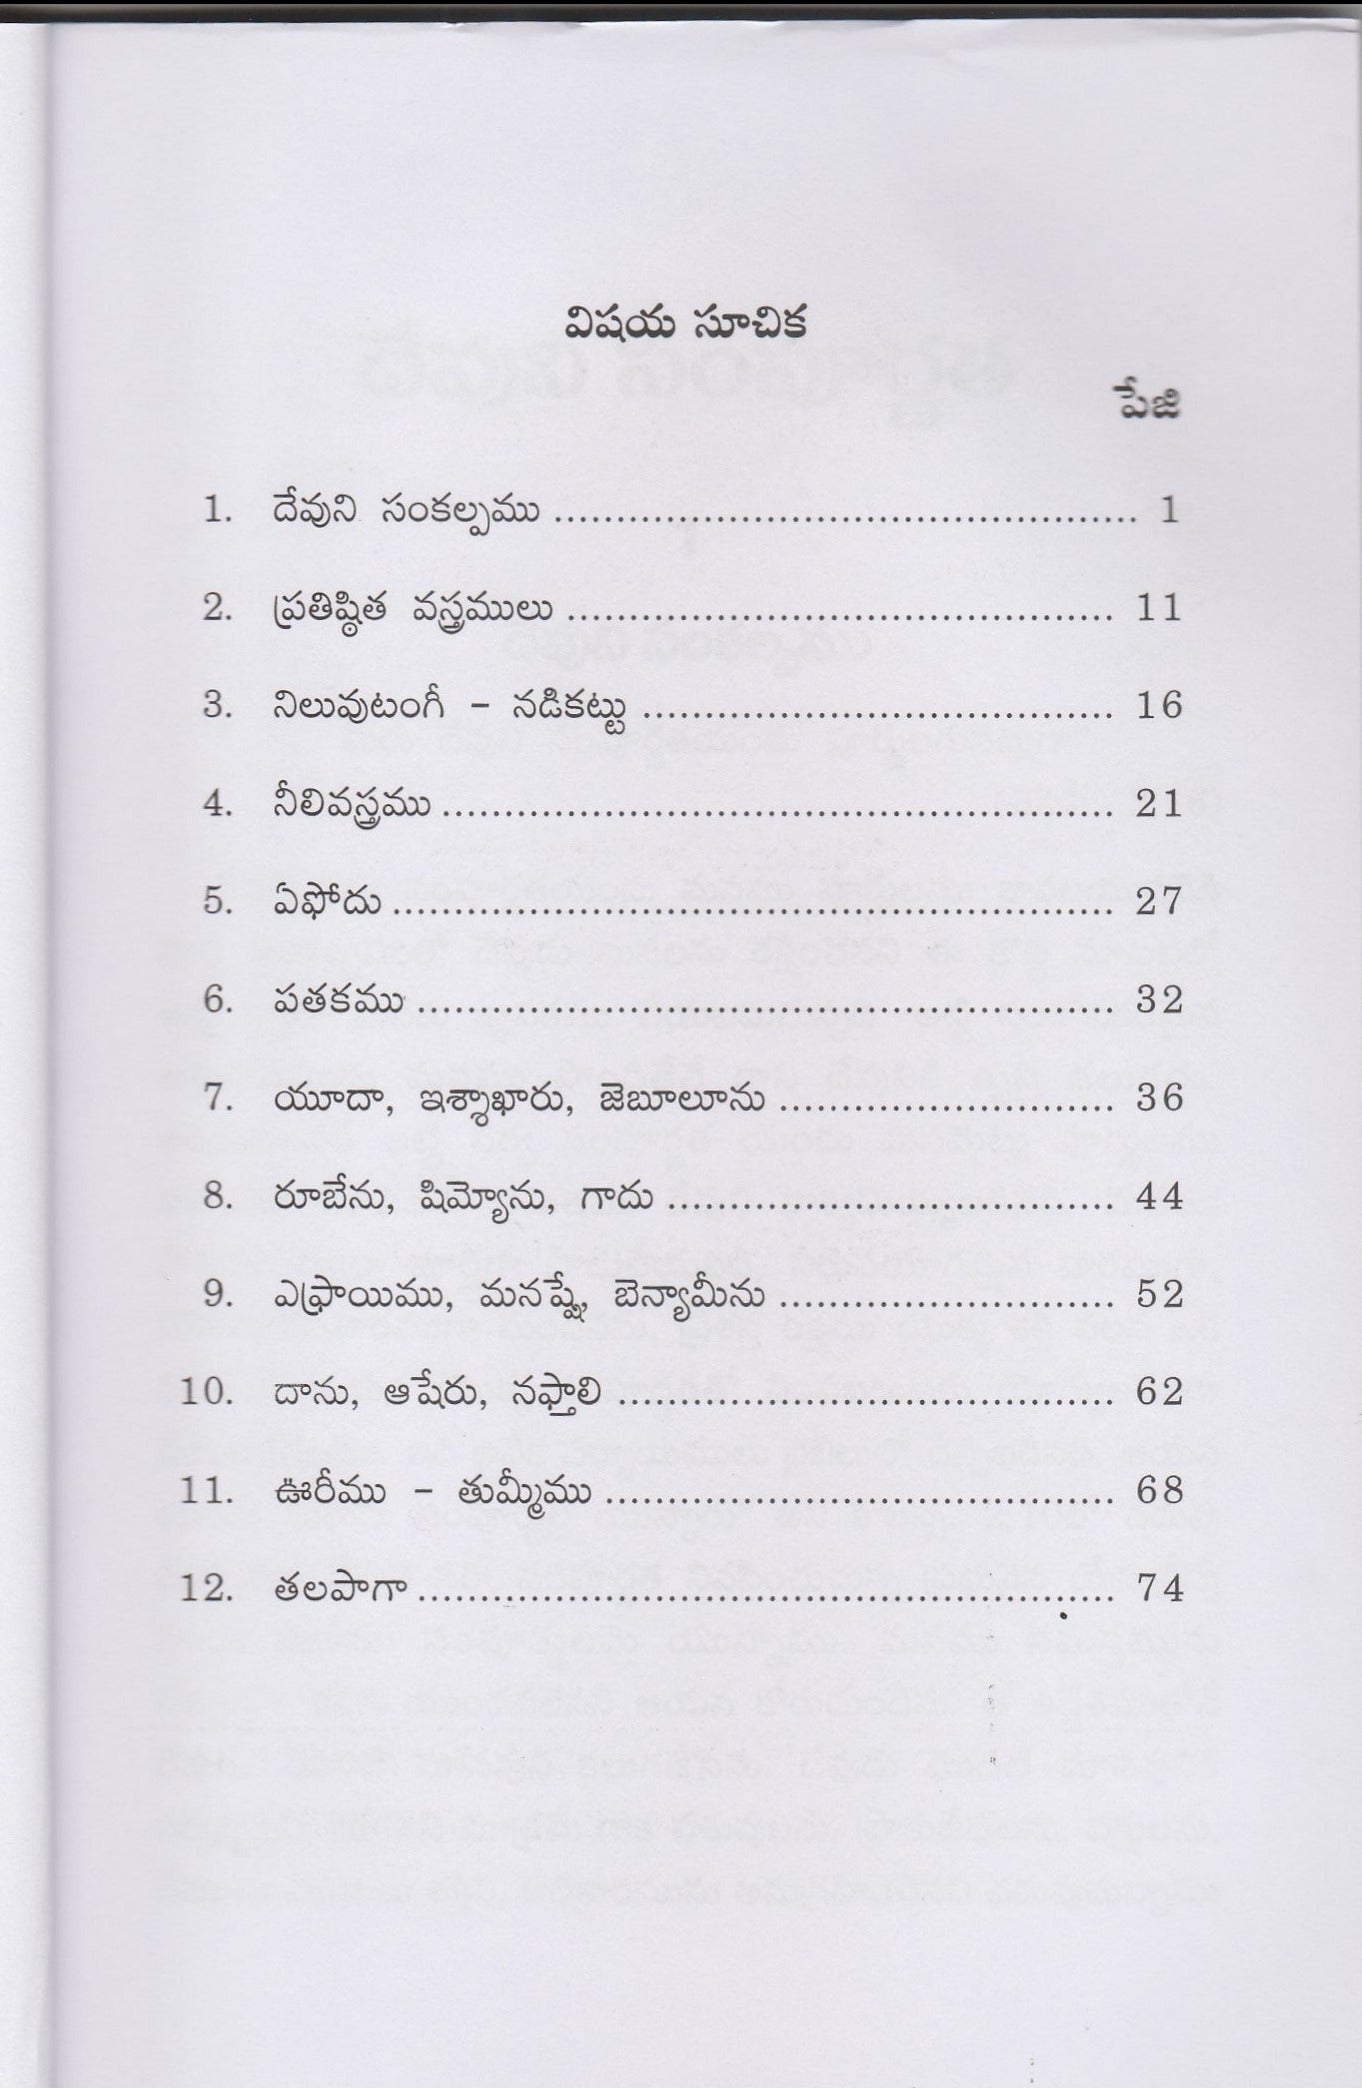 Fullness of God by Bro Bakht Singh in Telugu | Telugu Bakht Singh Books | Telugu Christian Books